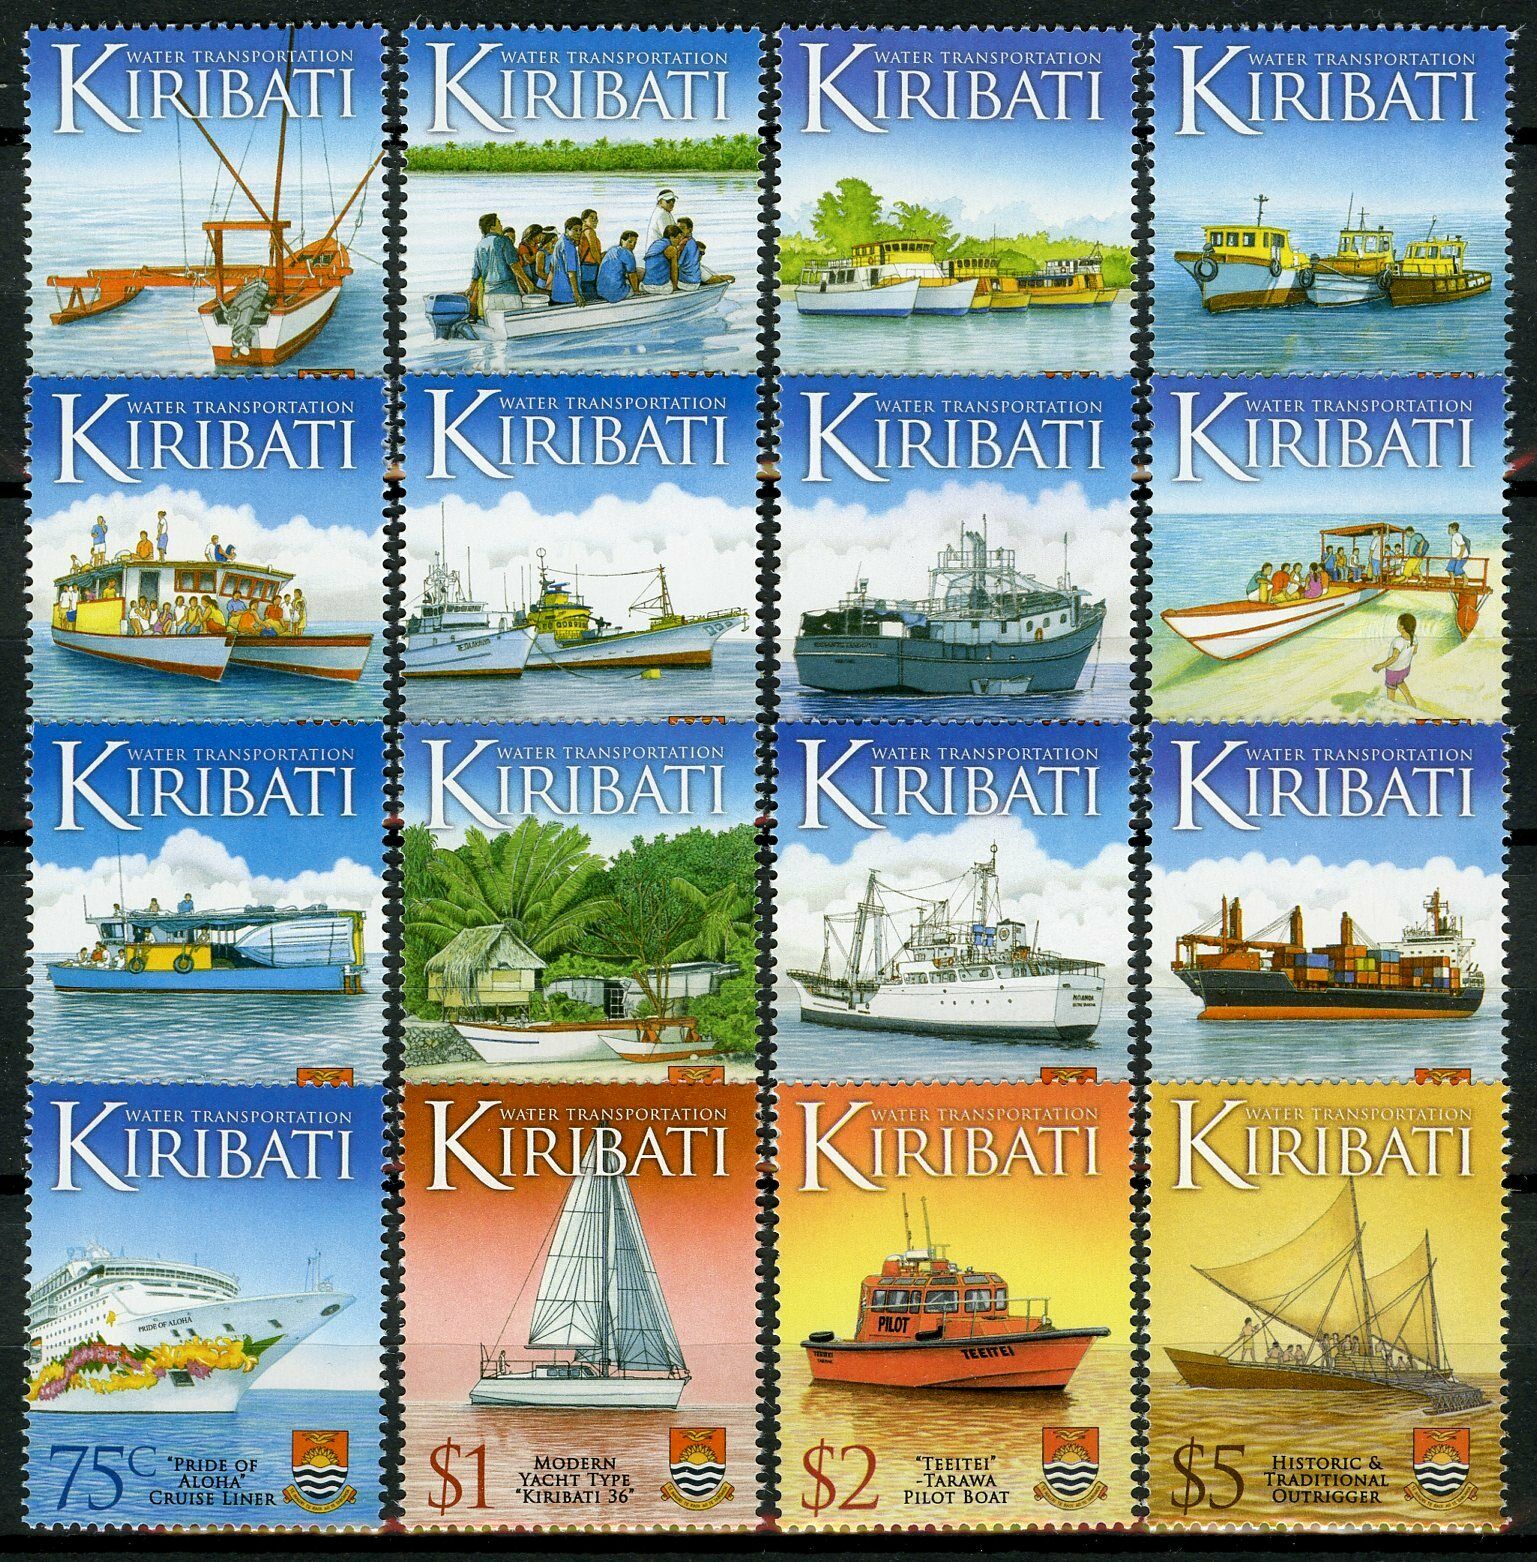 Kiribati 2013 MNH Ships Stamps Water Transport Transportation Definitives 16v Set